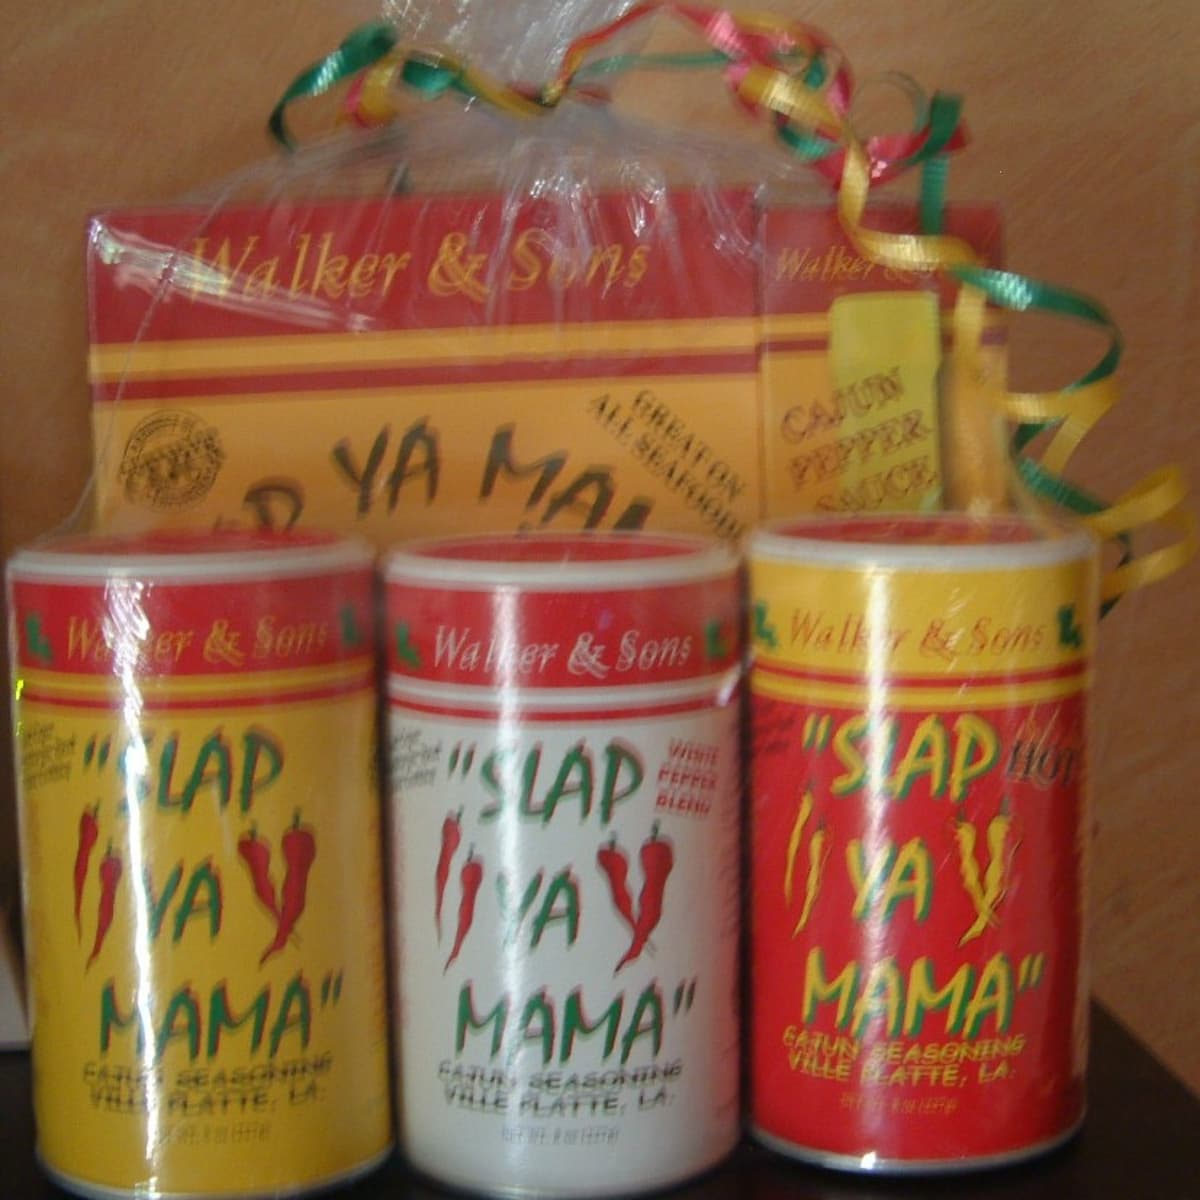 Slap Ya Mama Cajun Seasoning, Original - 8 oz canister